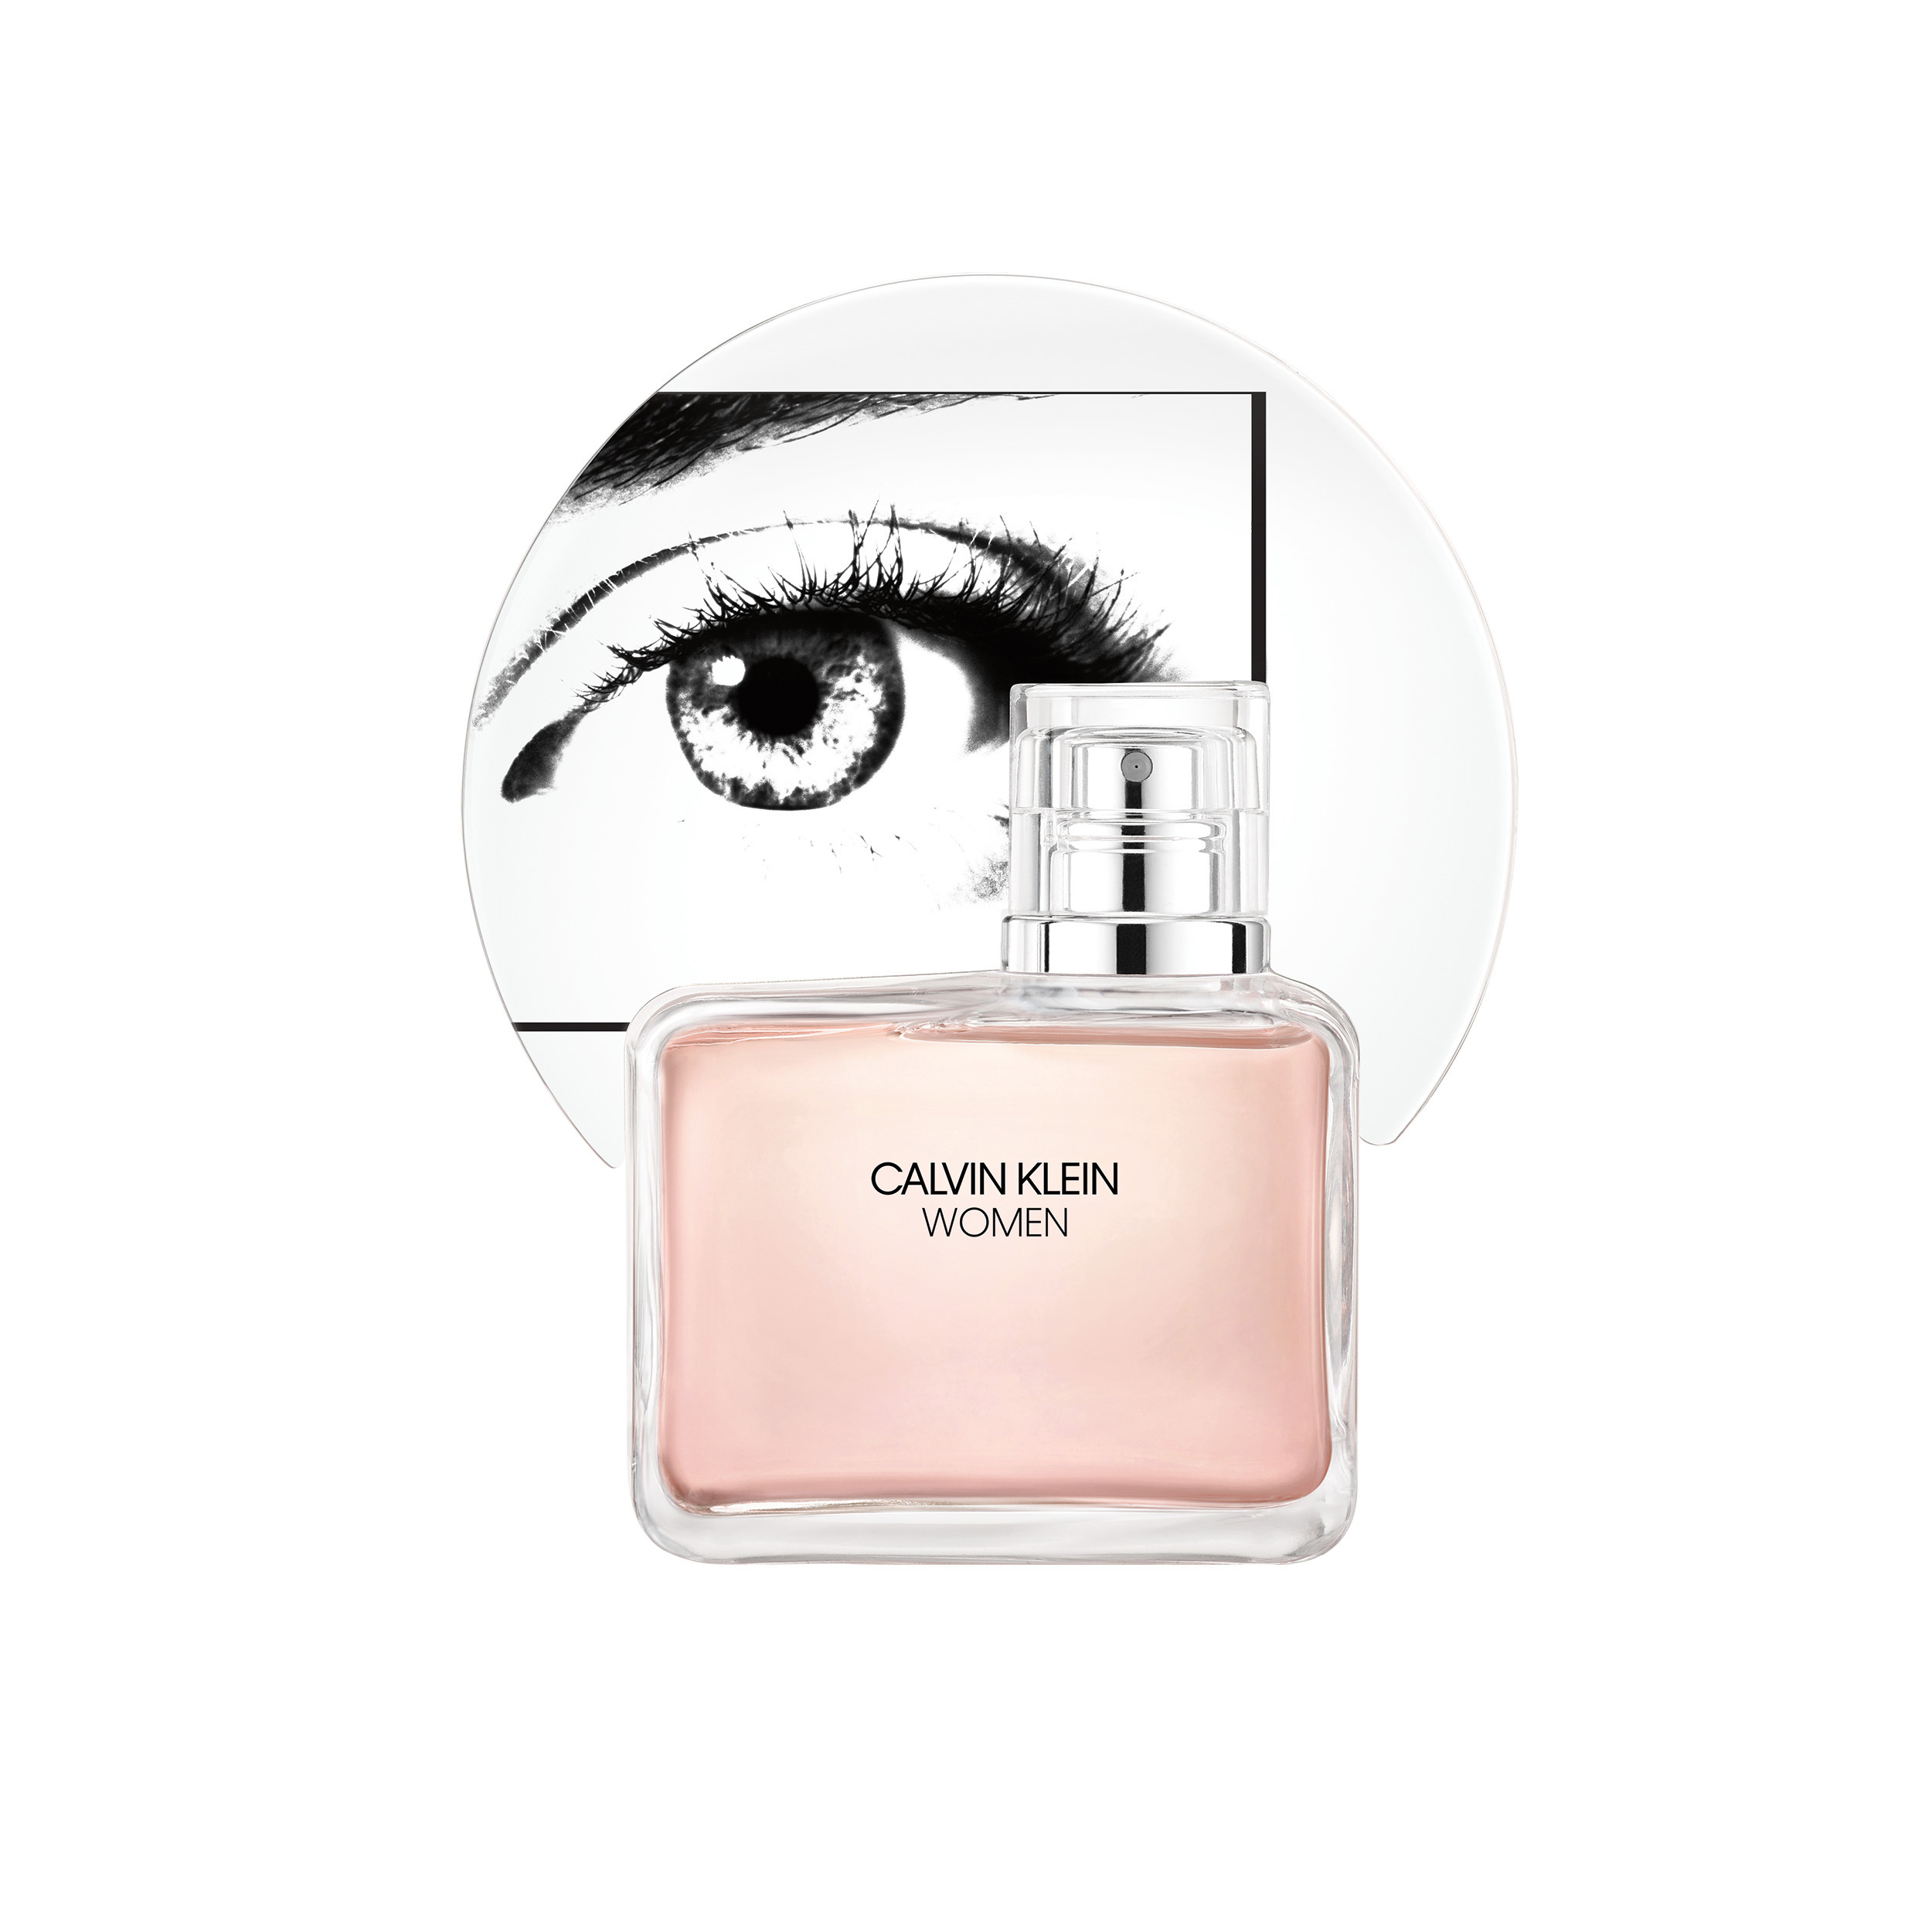 Calvin Klein Women eau de parfum / 100 ml / dames